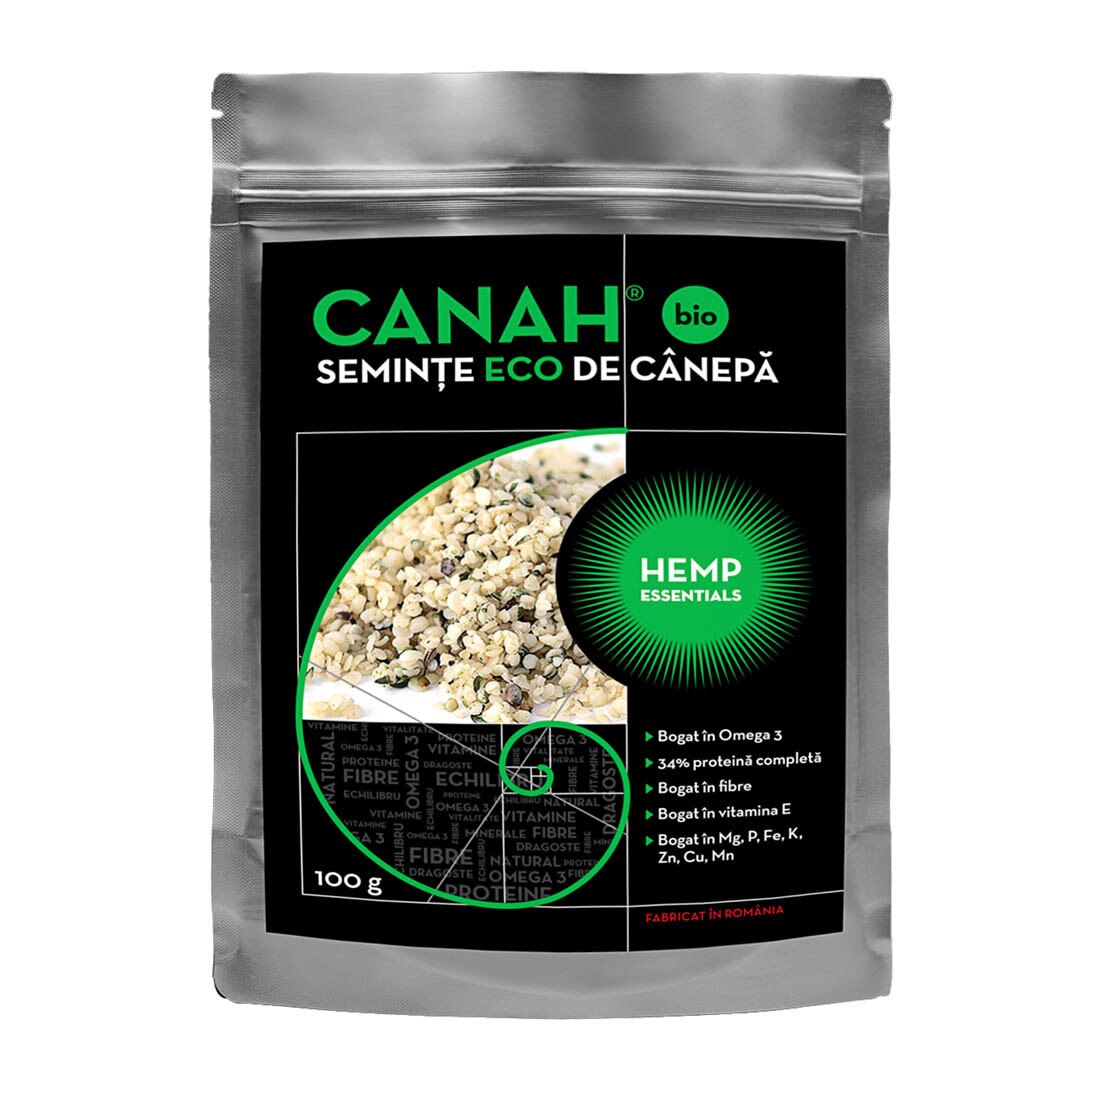 Seminte decorticate de canepa ECO, 100 g, Canah 